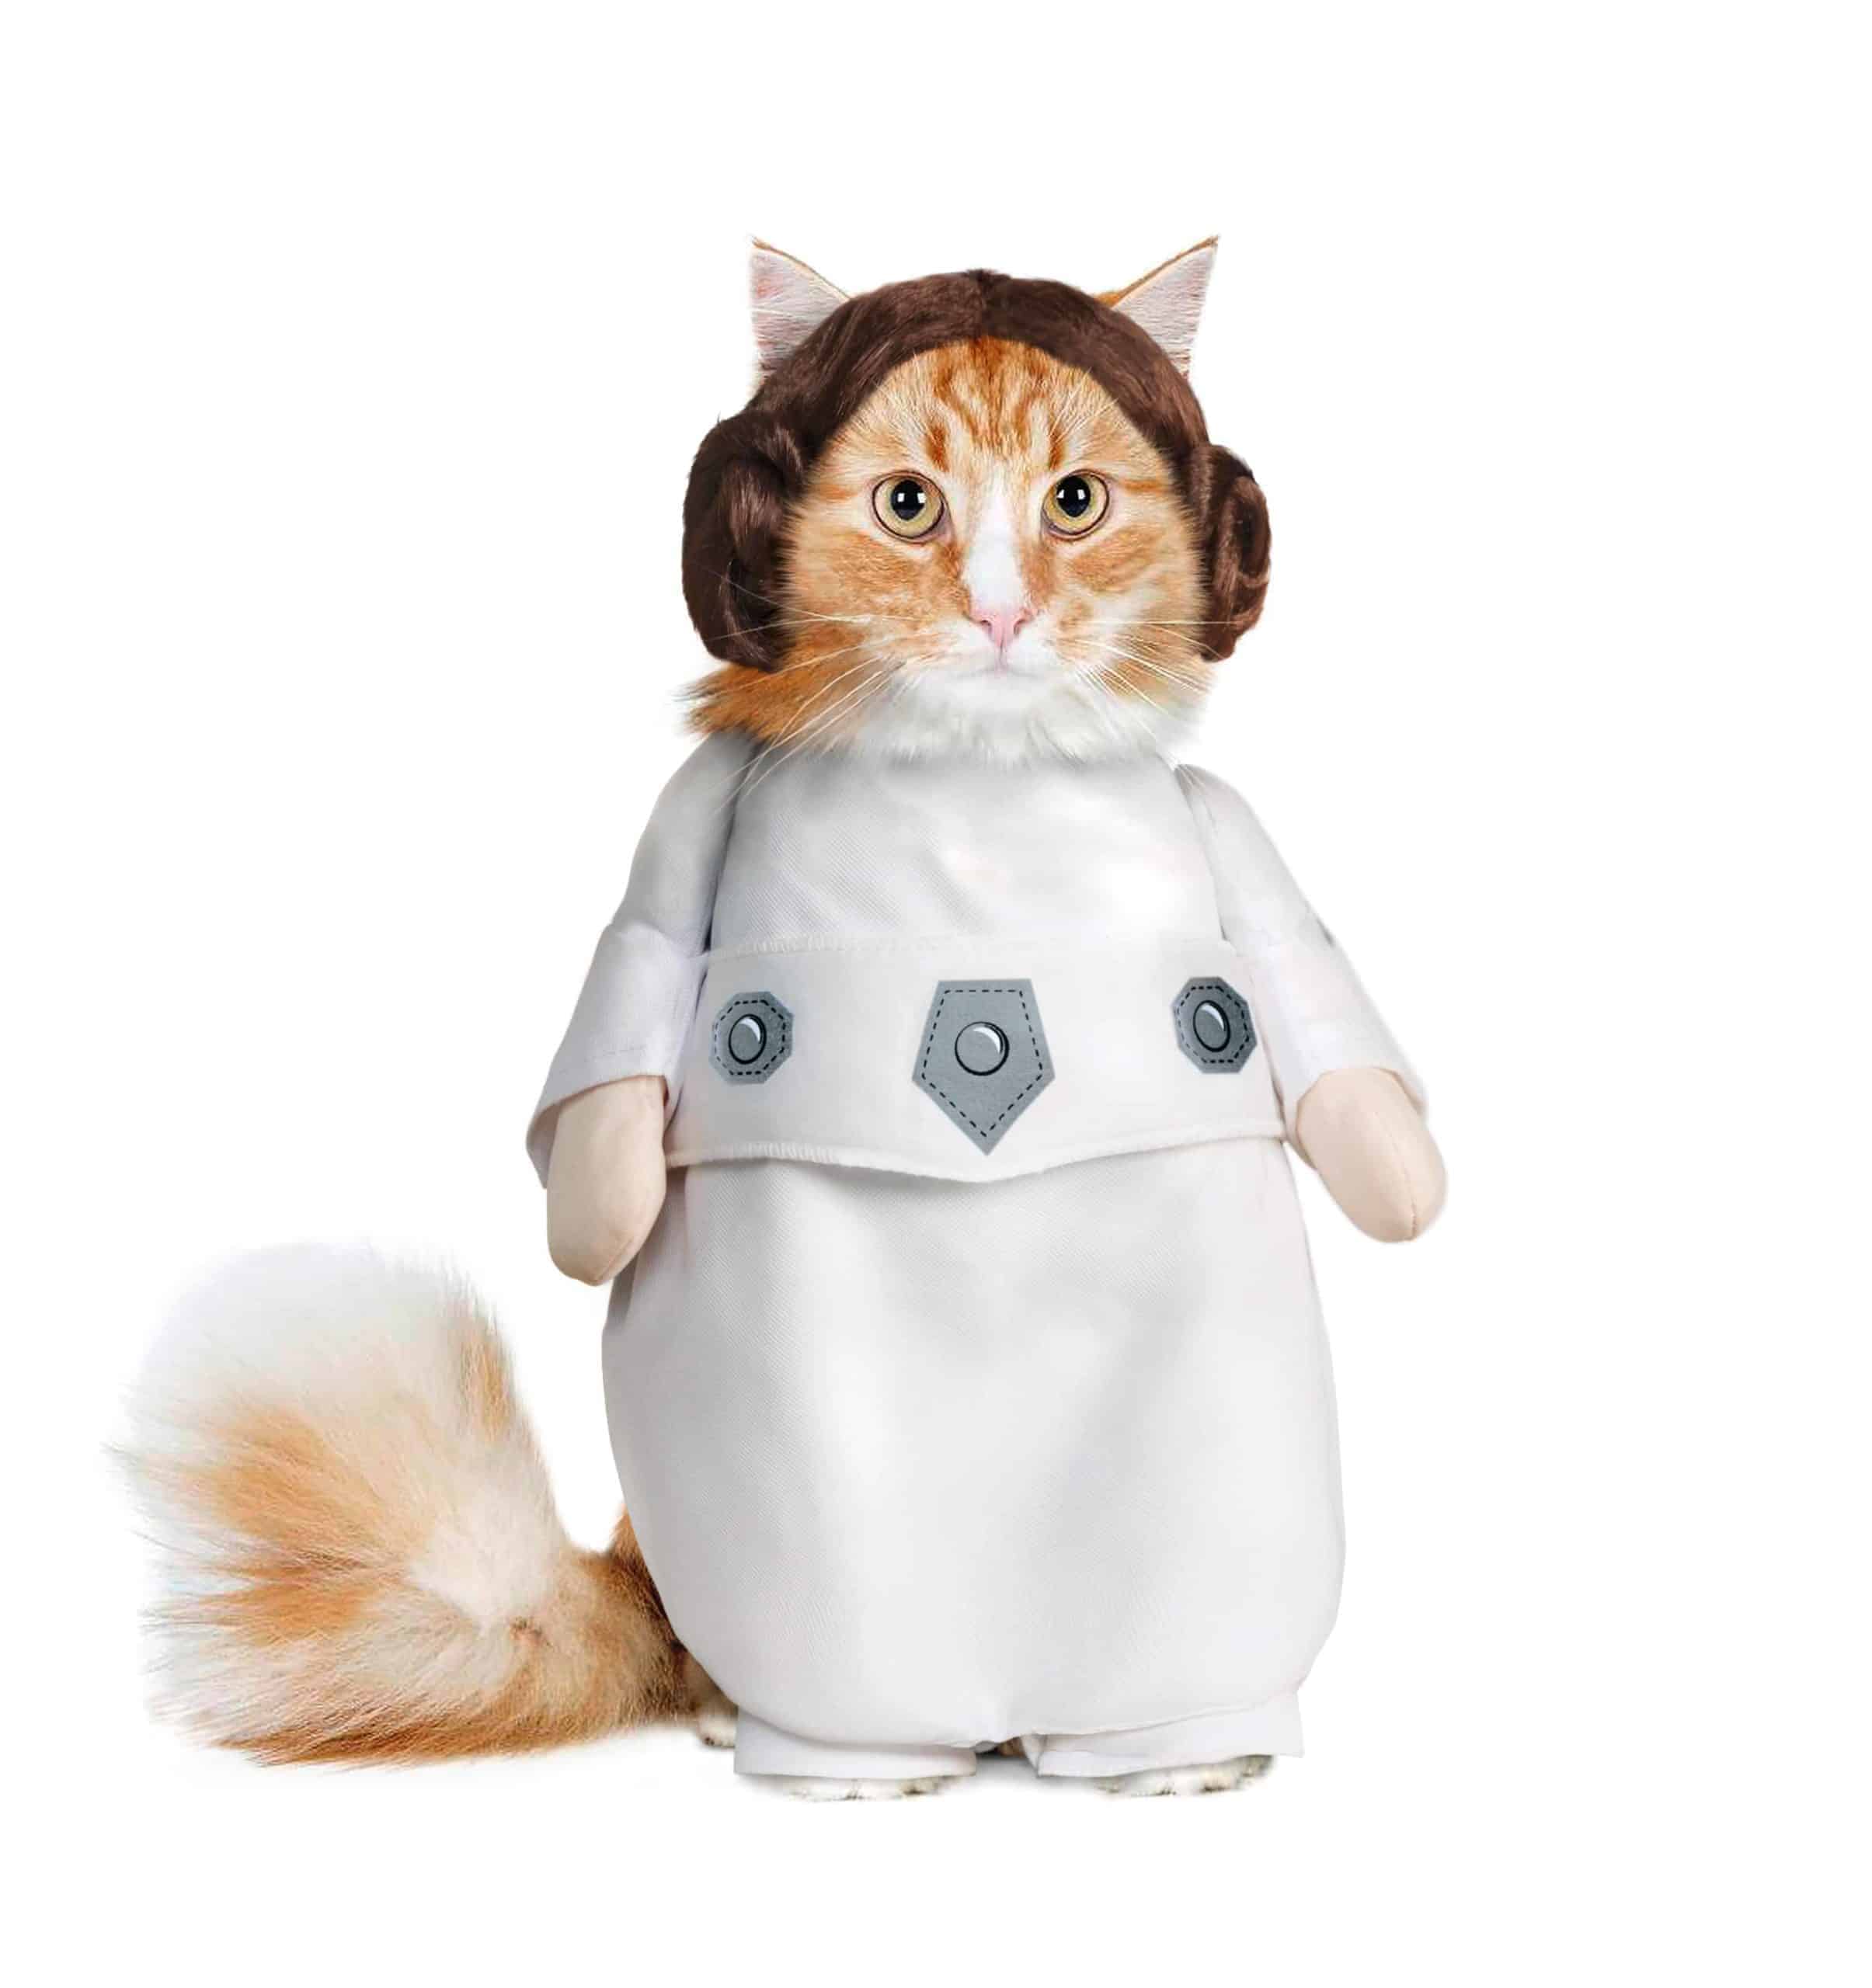 Cat Princess Leia Costume Cat Leia Princess Costumes Hat Etsy Cats Wars
Star